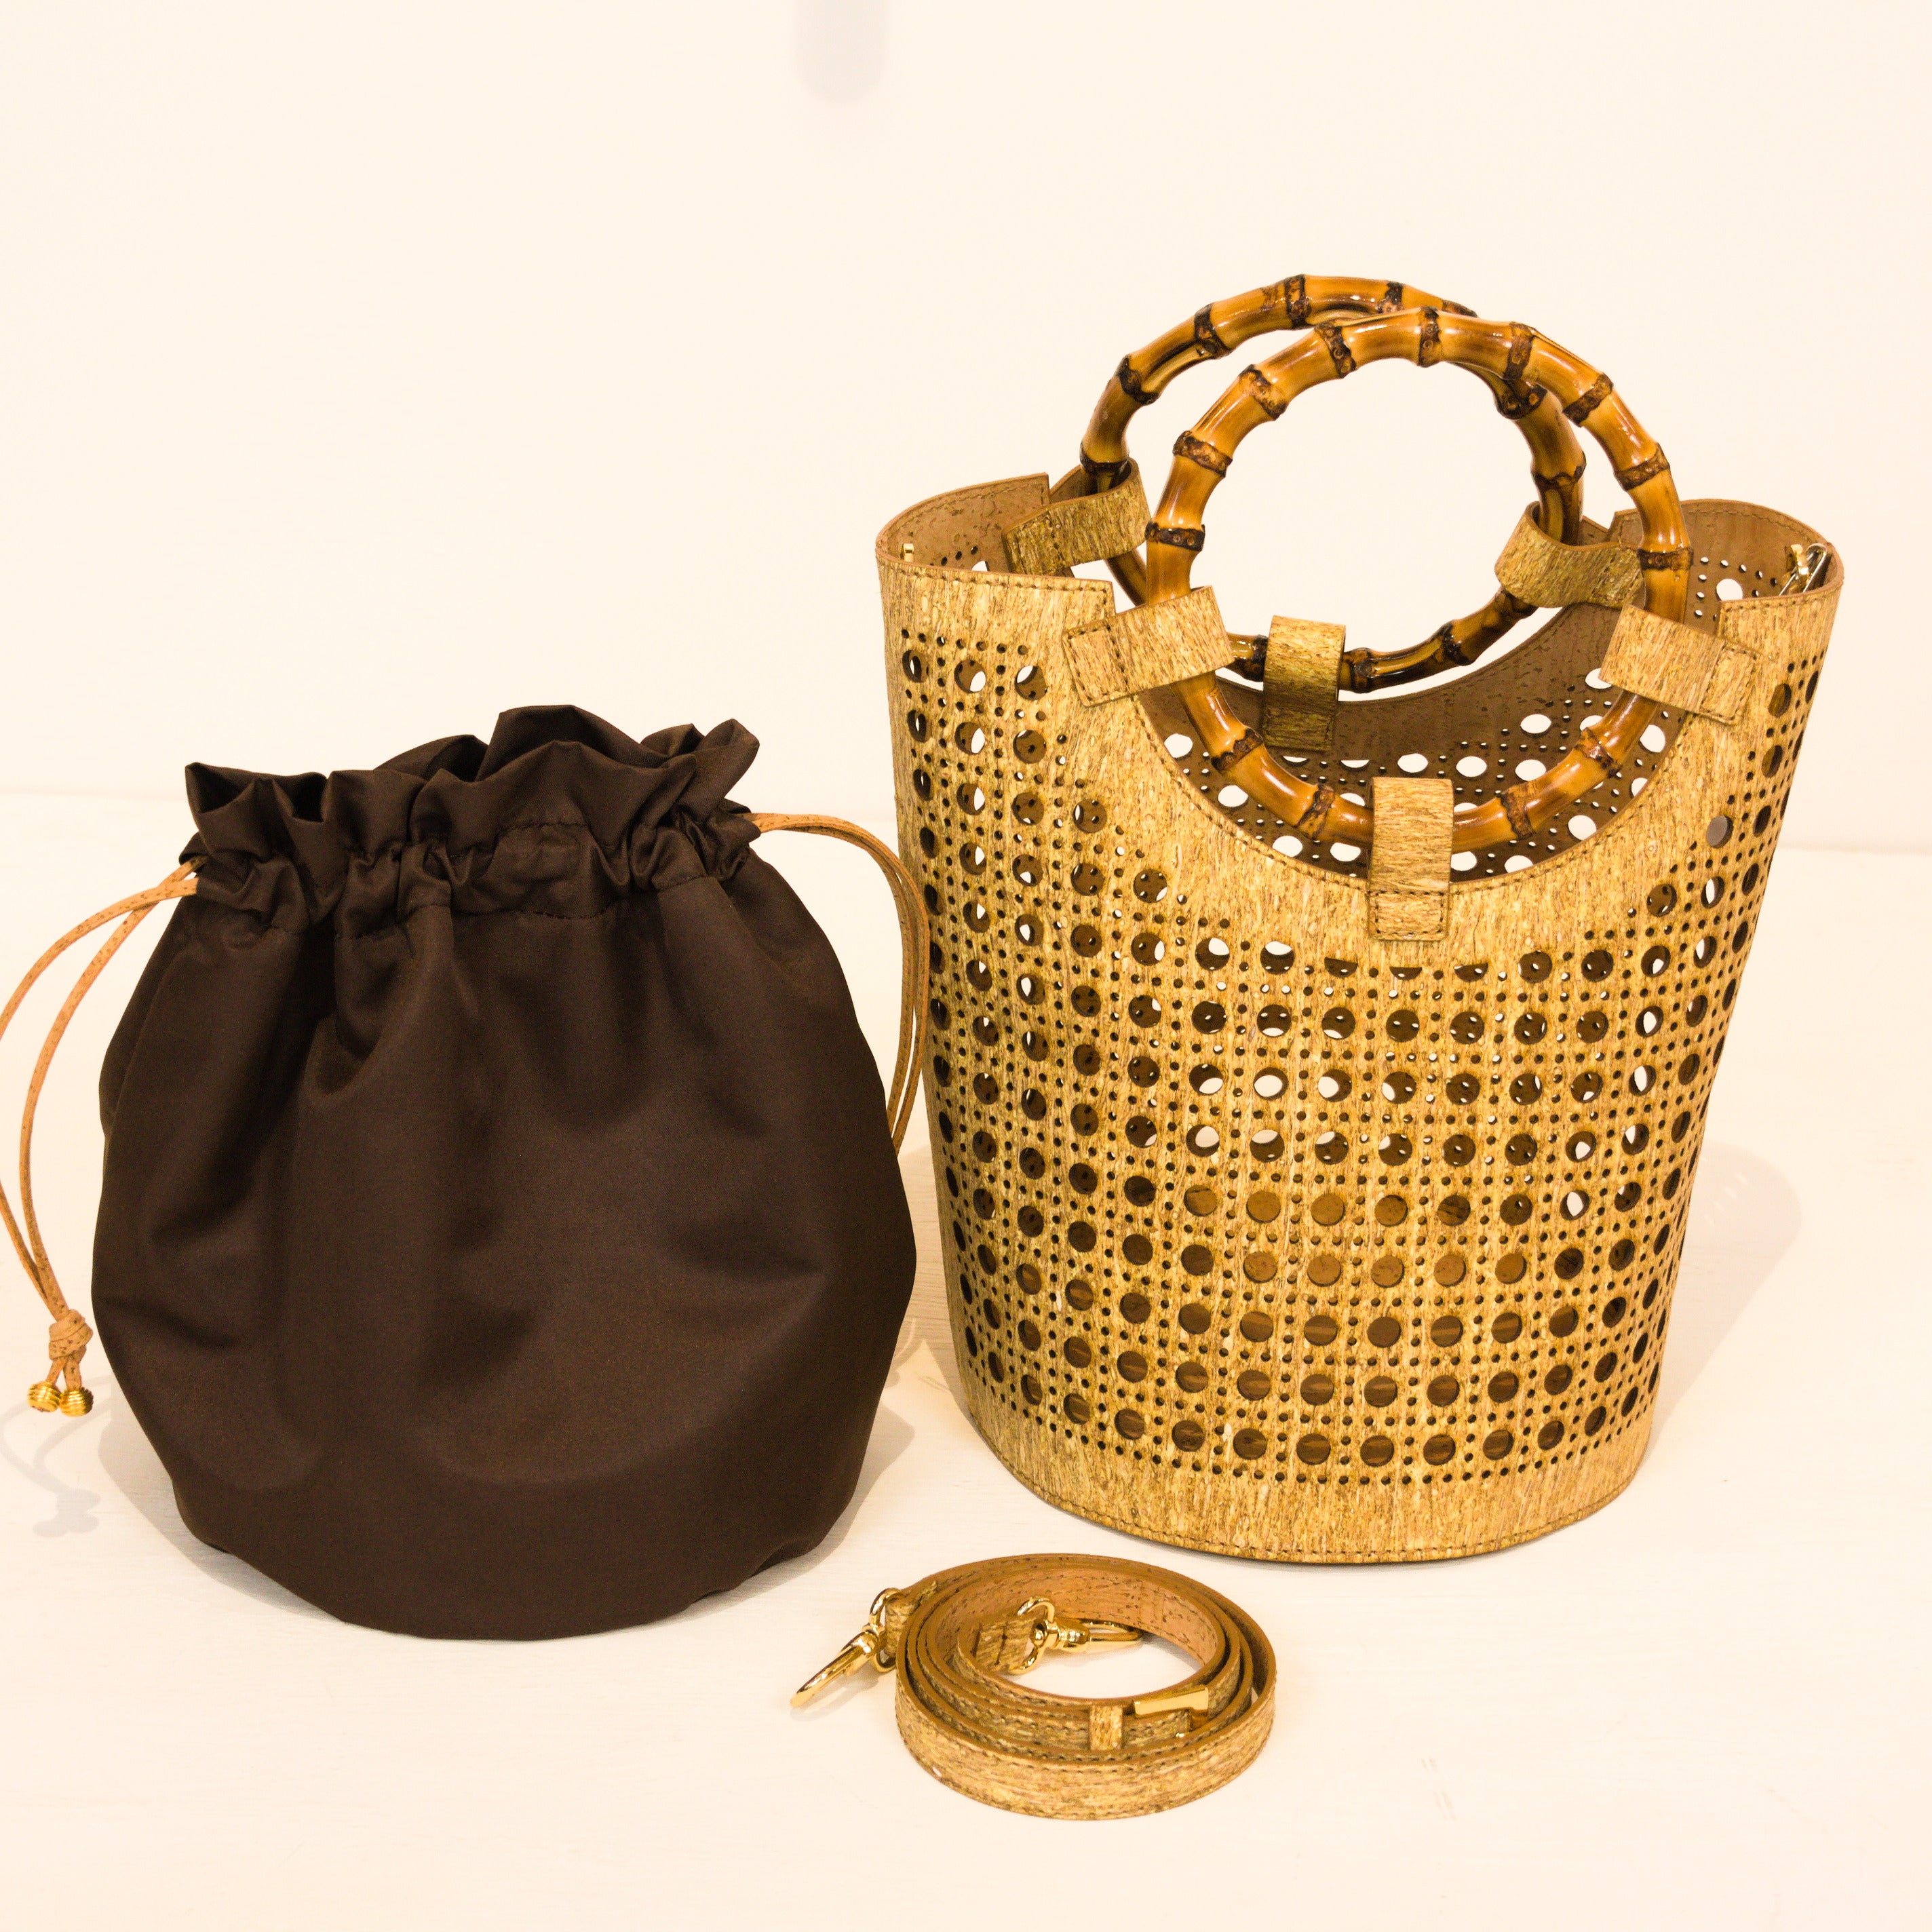 Cork handbag * in 2 sizes and 2 colors * vegan * shoulder bag for women * crossbody * shopper * handmade in Portugal